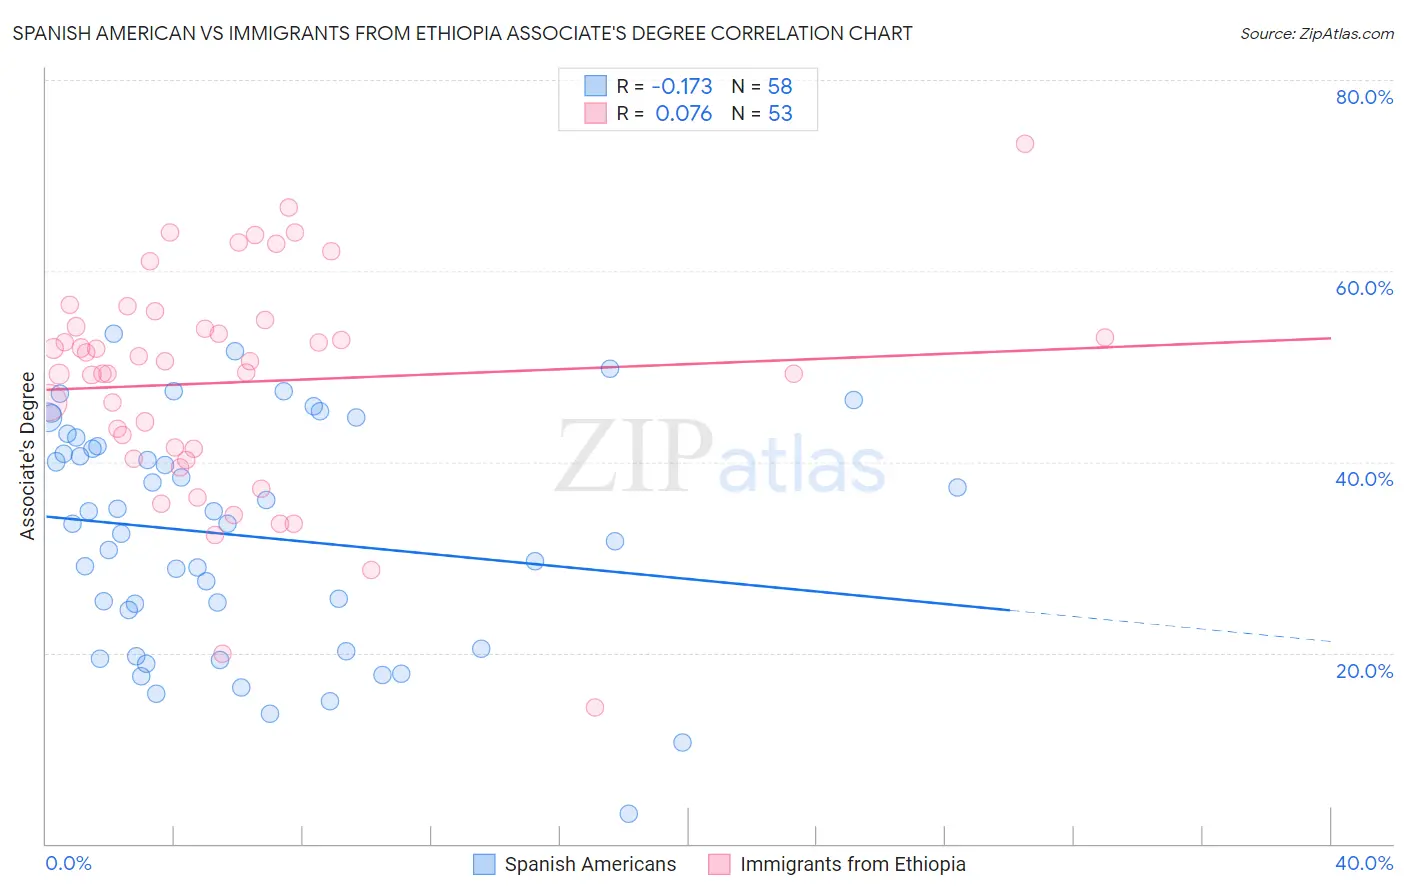 Spanish American vs Immigrants from Ethiopia Associate's Degree